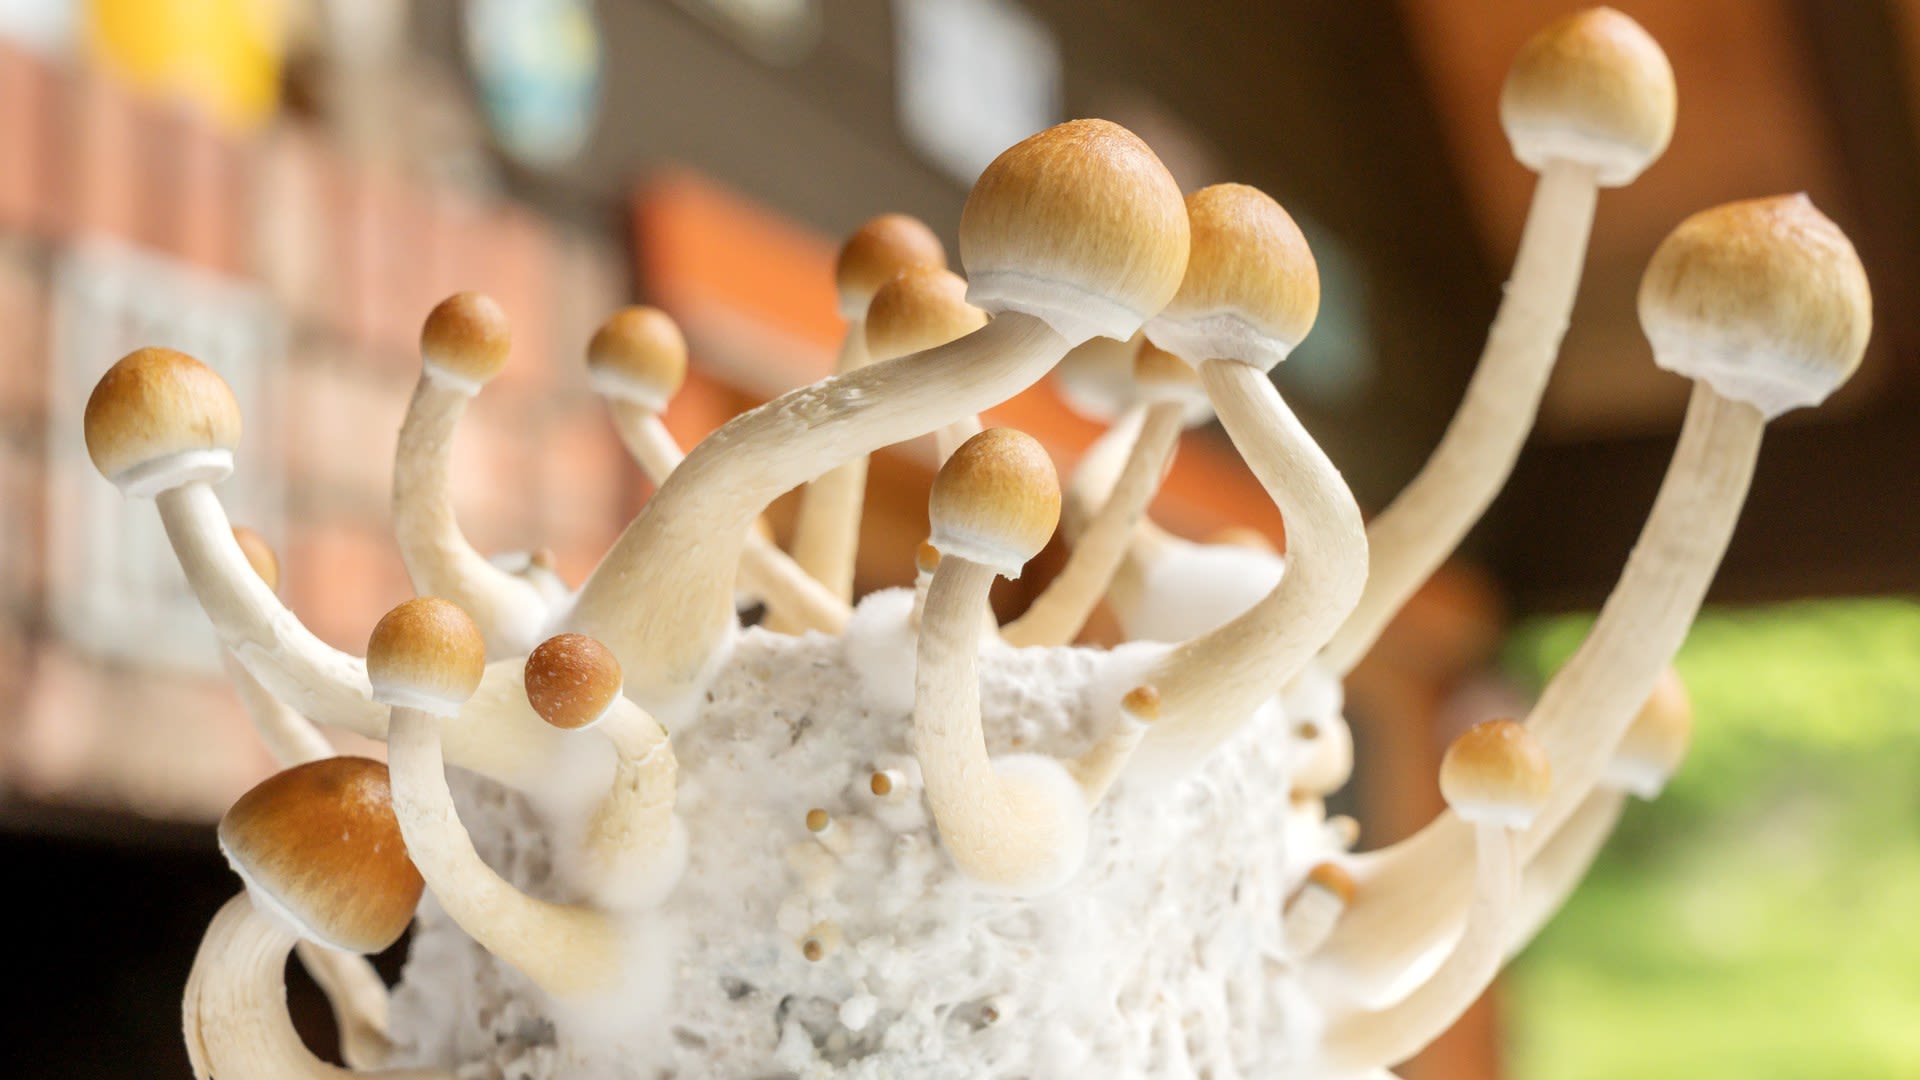 Magic mushrooms are 'more effective at treating depression than antidepressants'